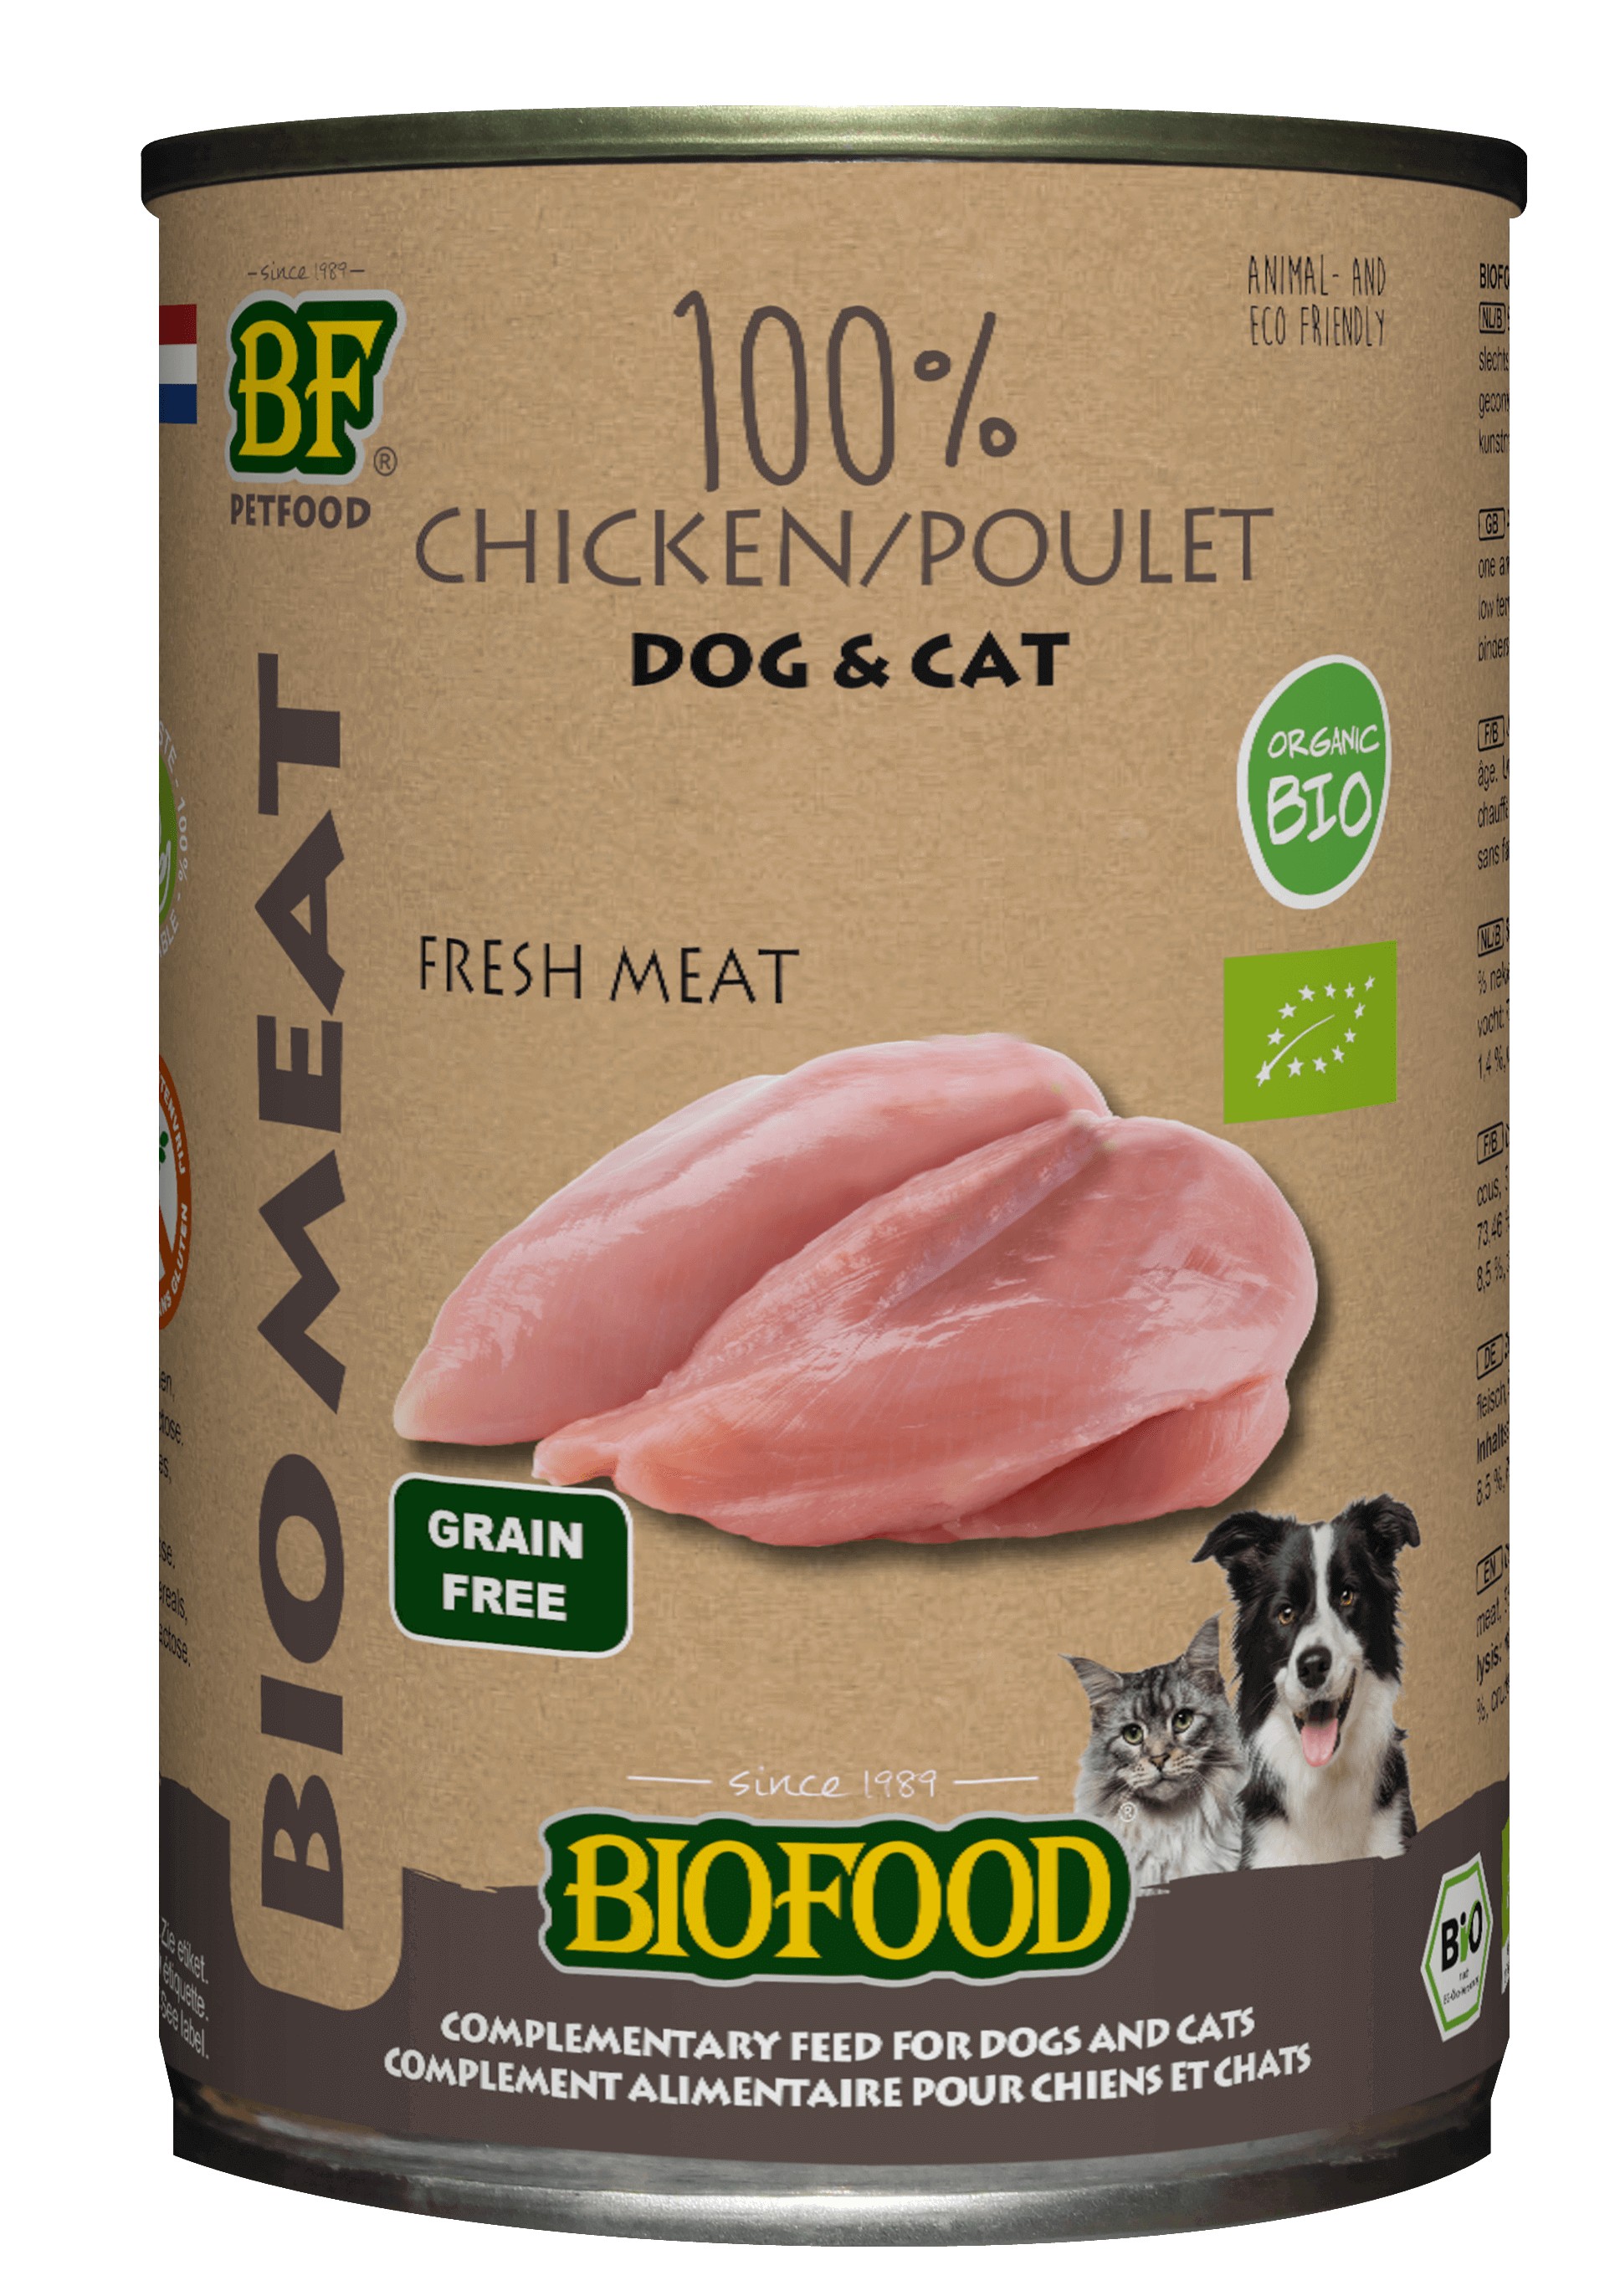 Afbeelding van 24x 400 g BF Petfood Biofood Organic 100% kippenvlees natvoer hond & kat (blik 400 g)